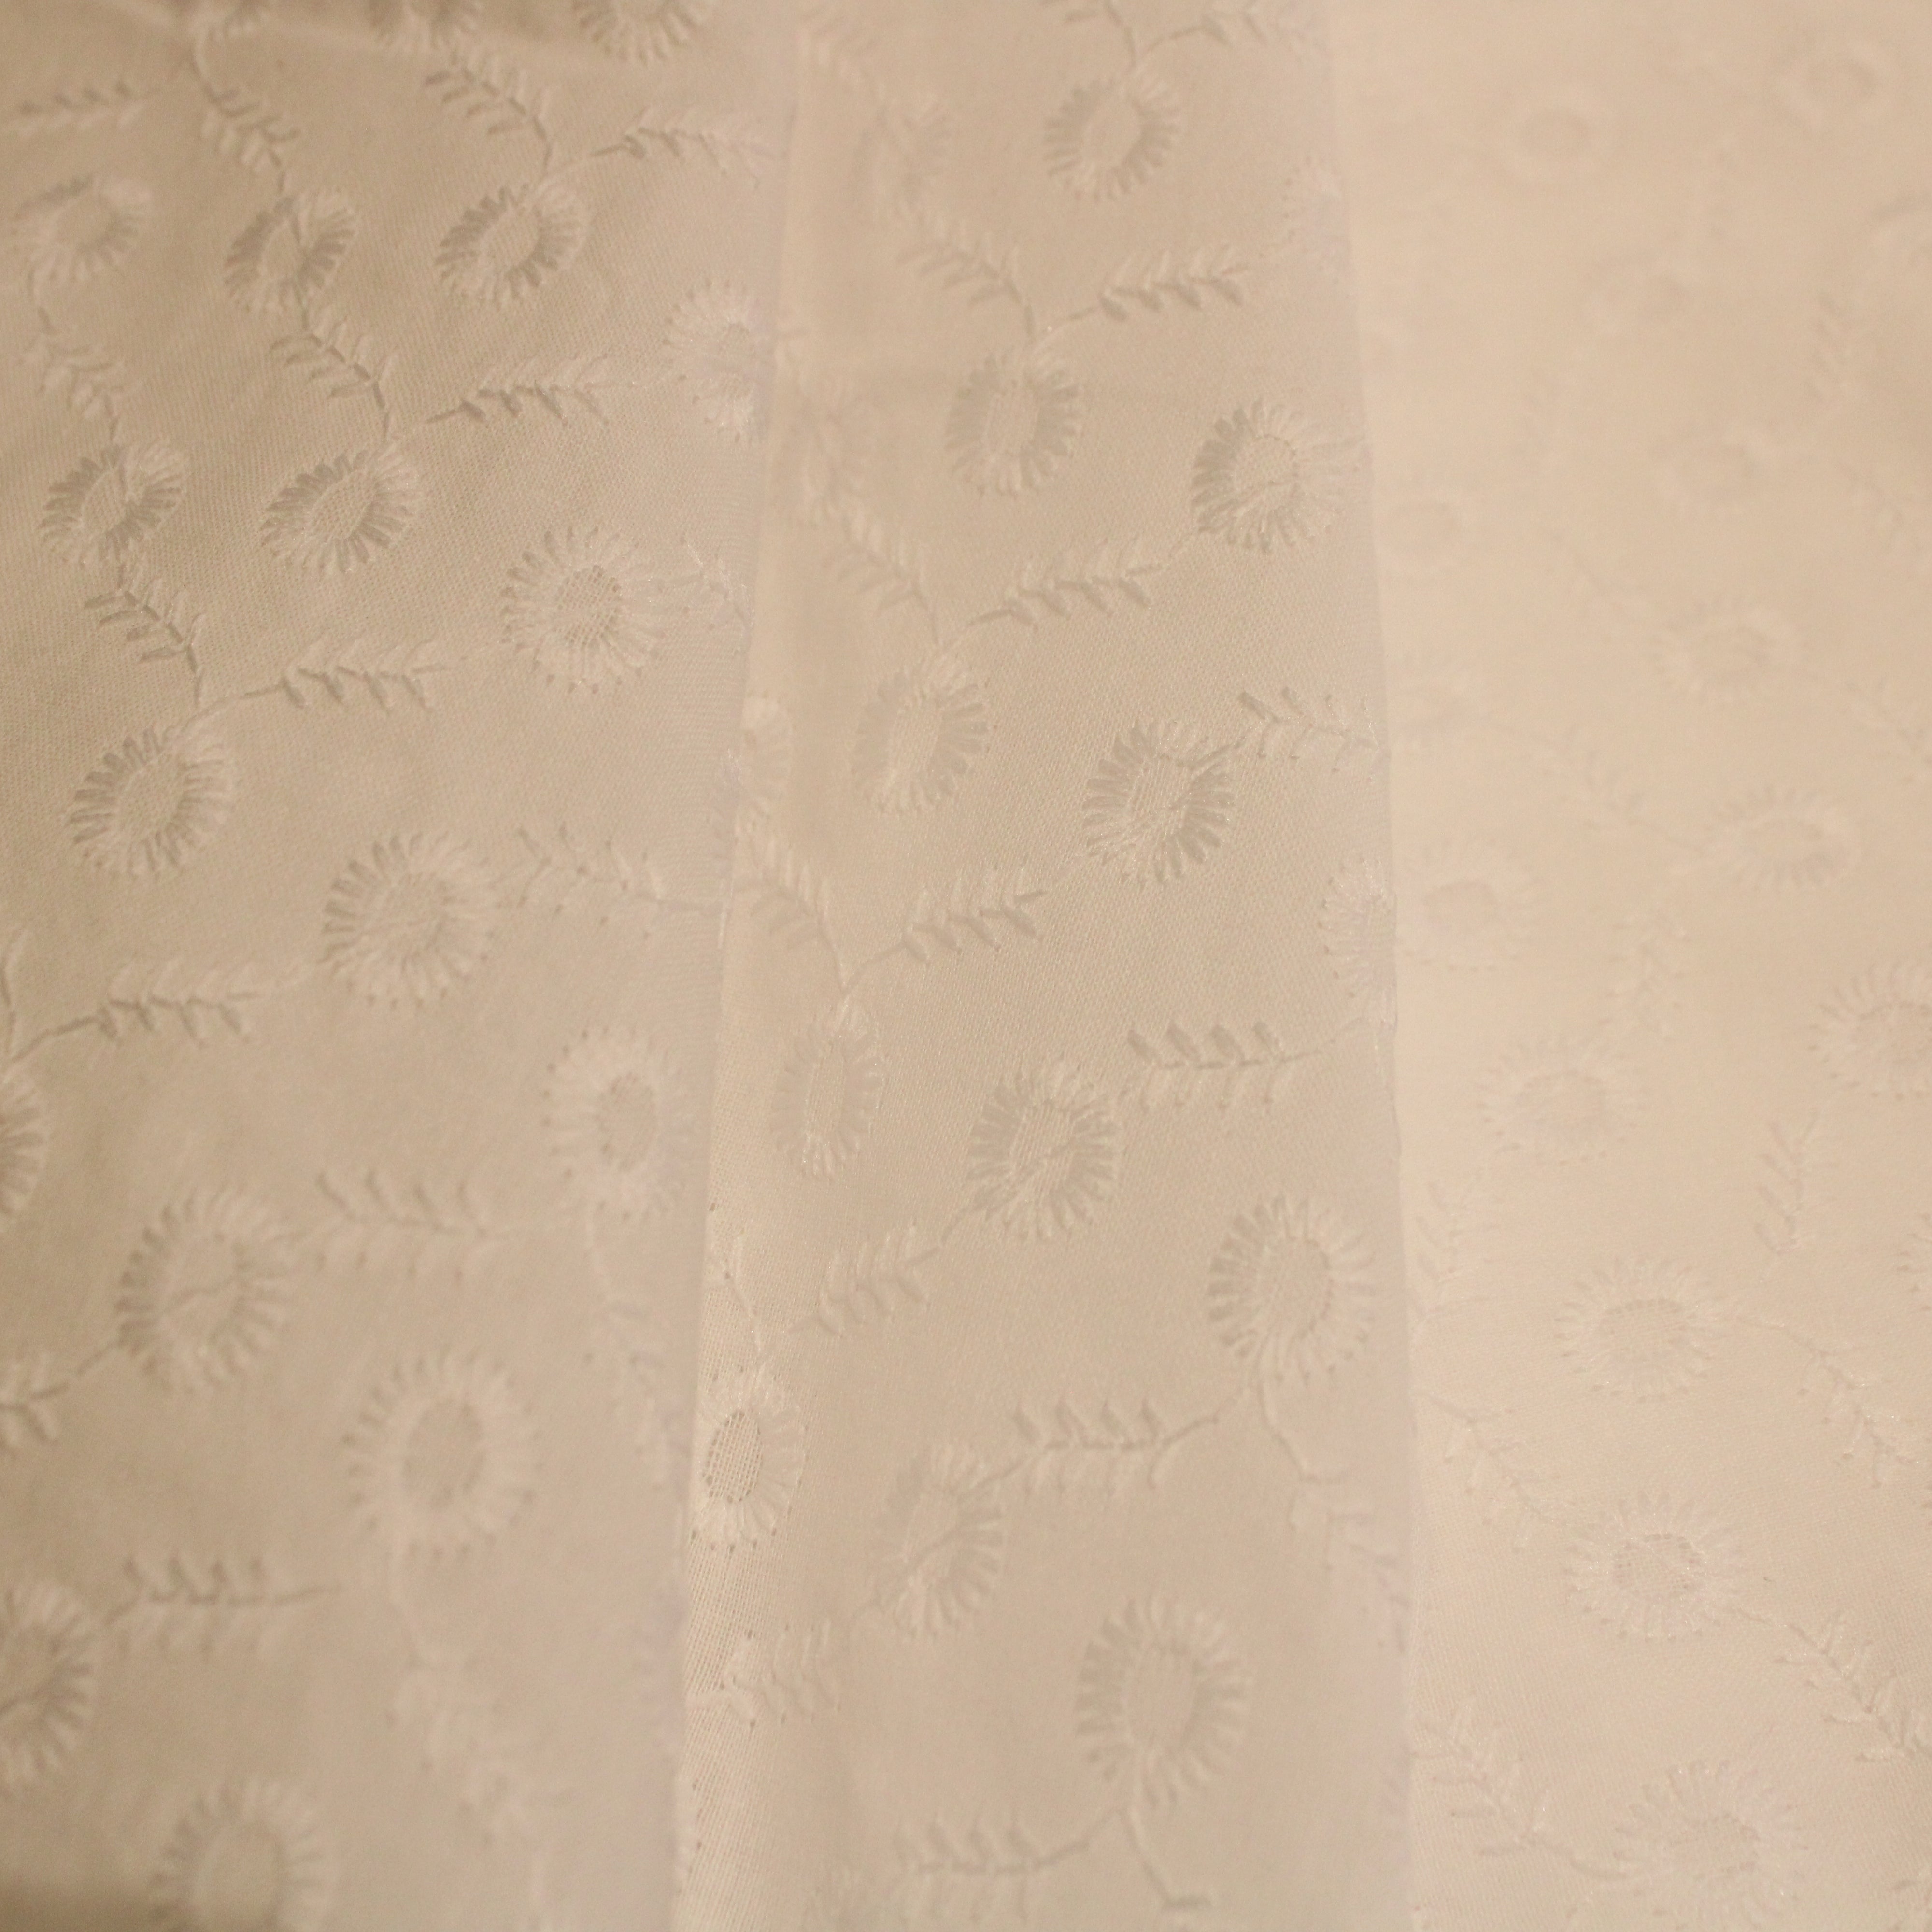 Dream weave - Natural Cotton White Embroidery Fabric